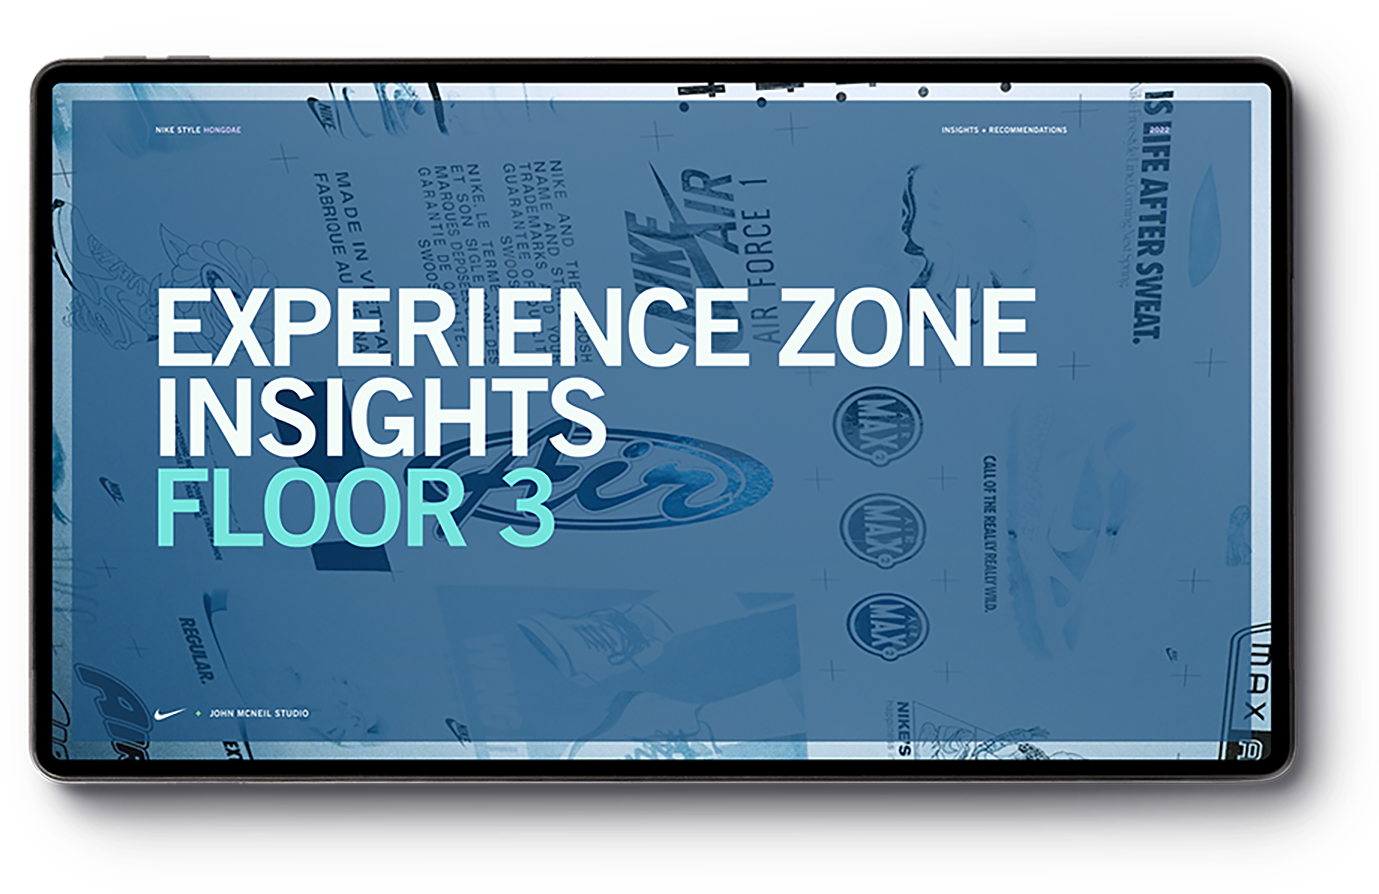 Insights-floor3@2x-2